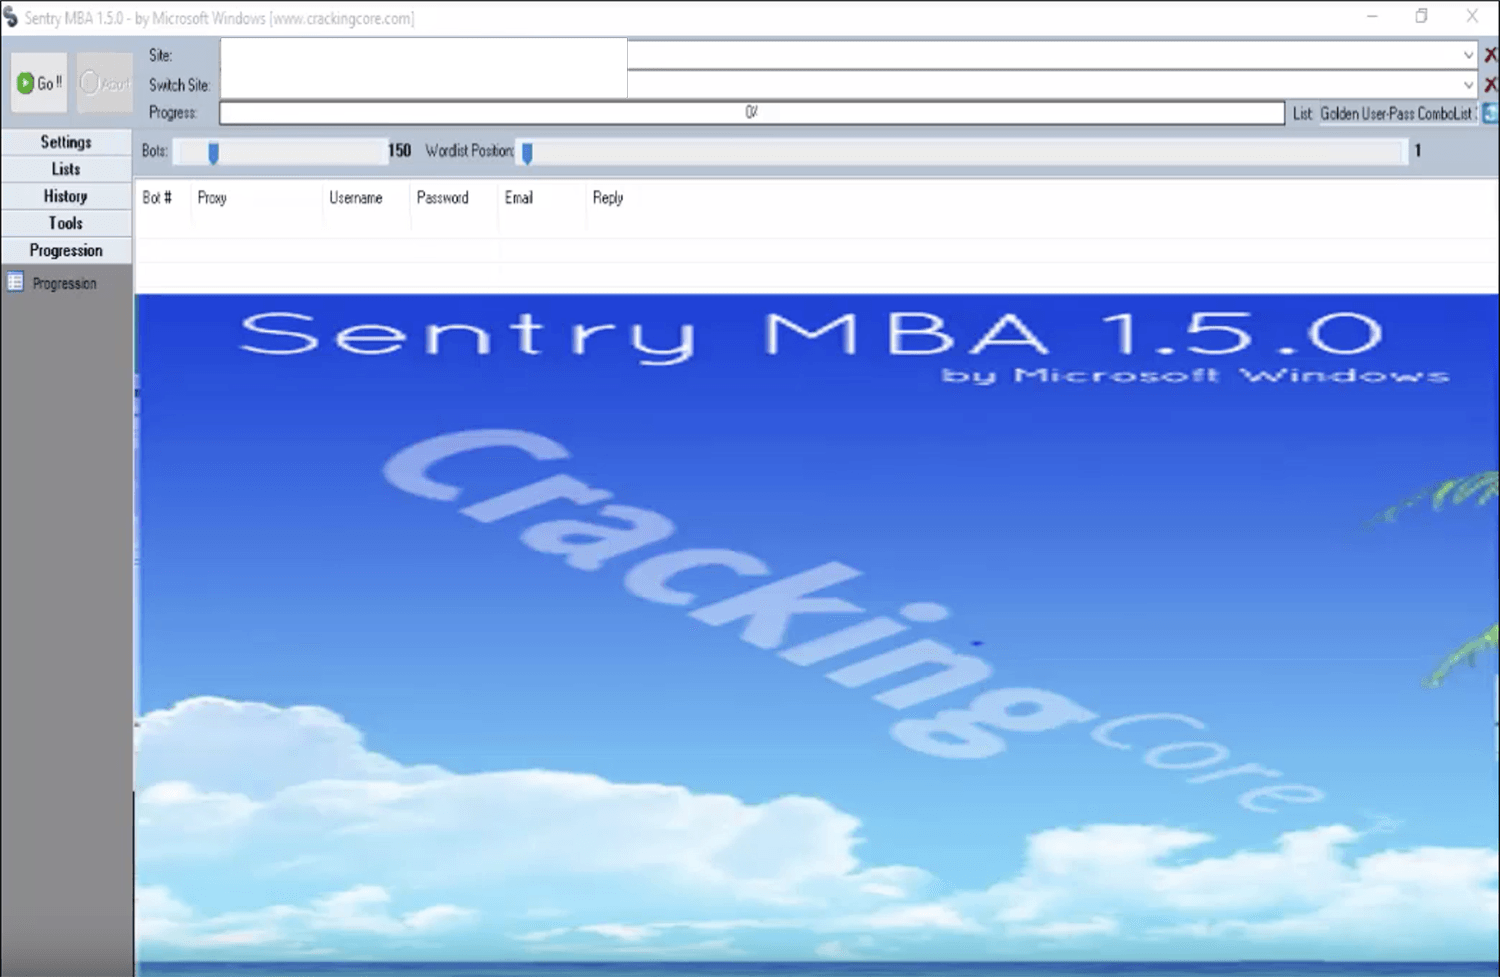 Sentry MBA 1.5.0